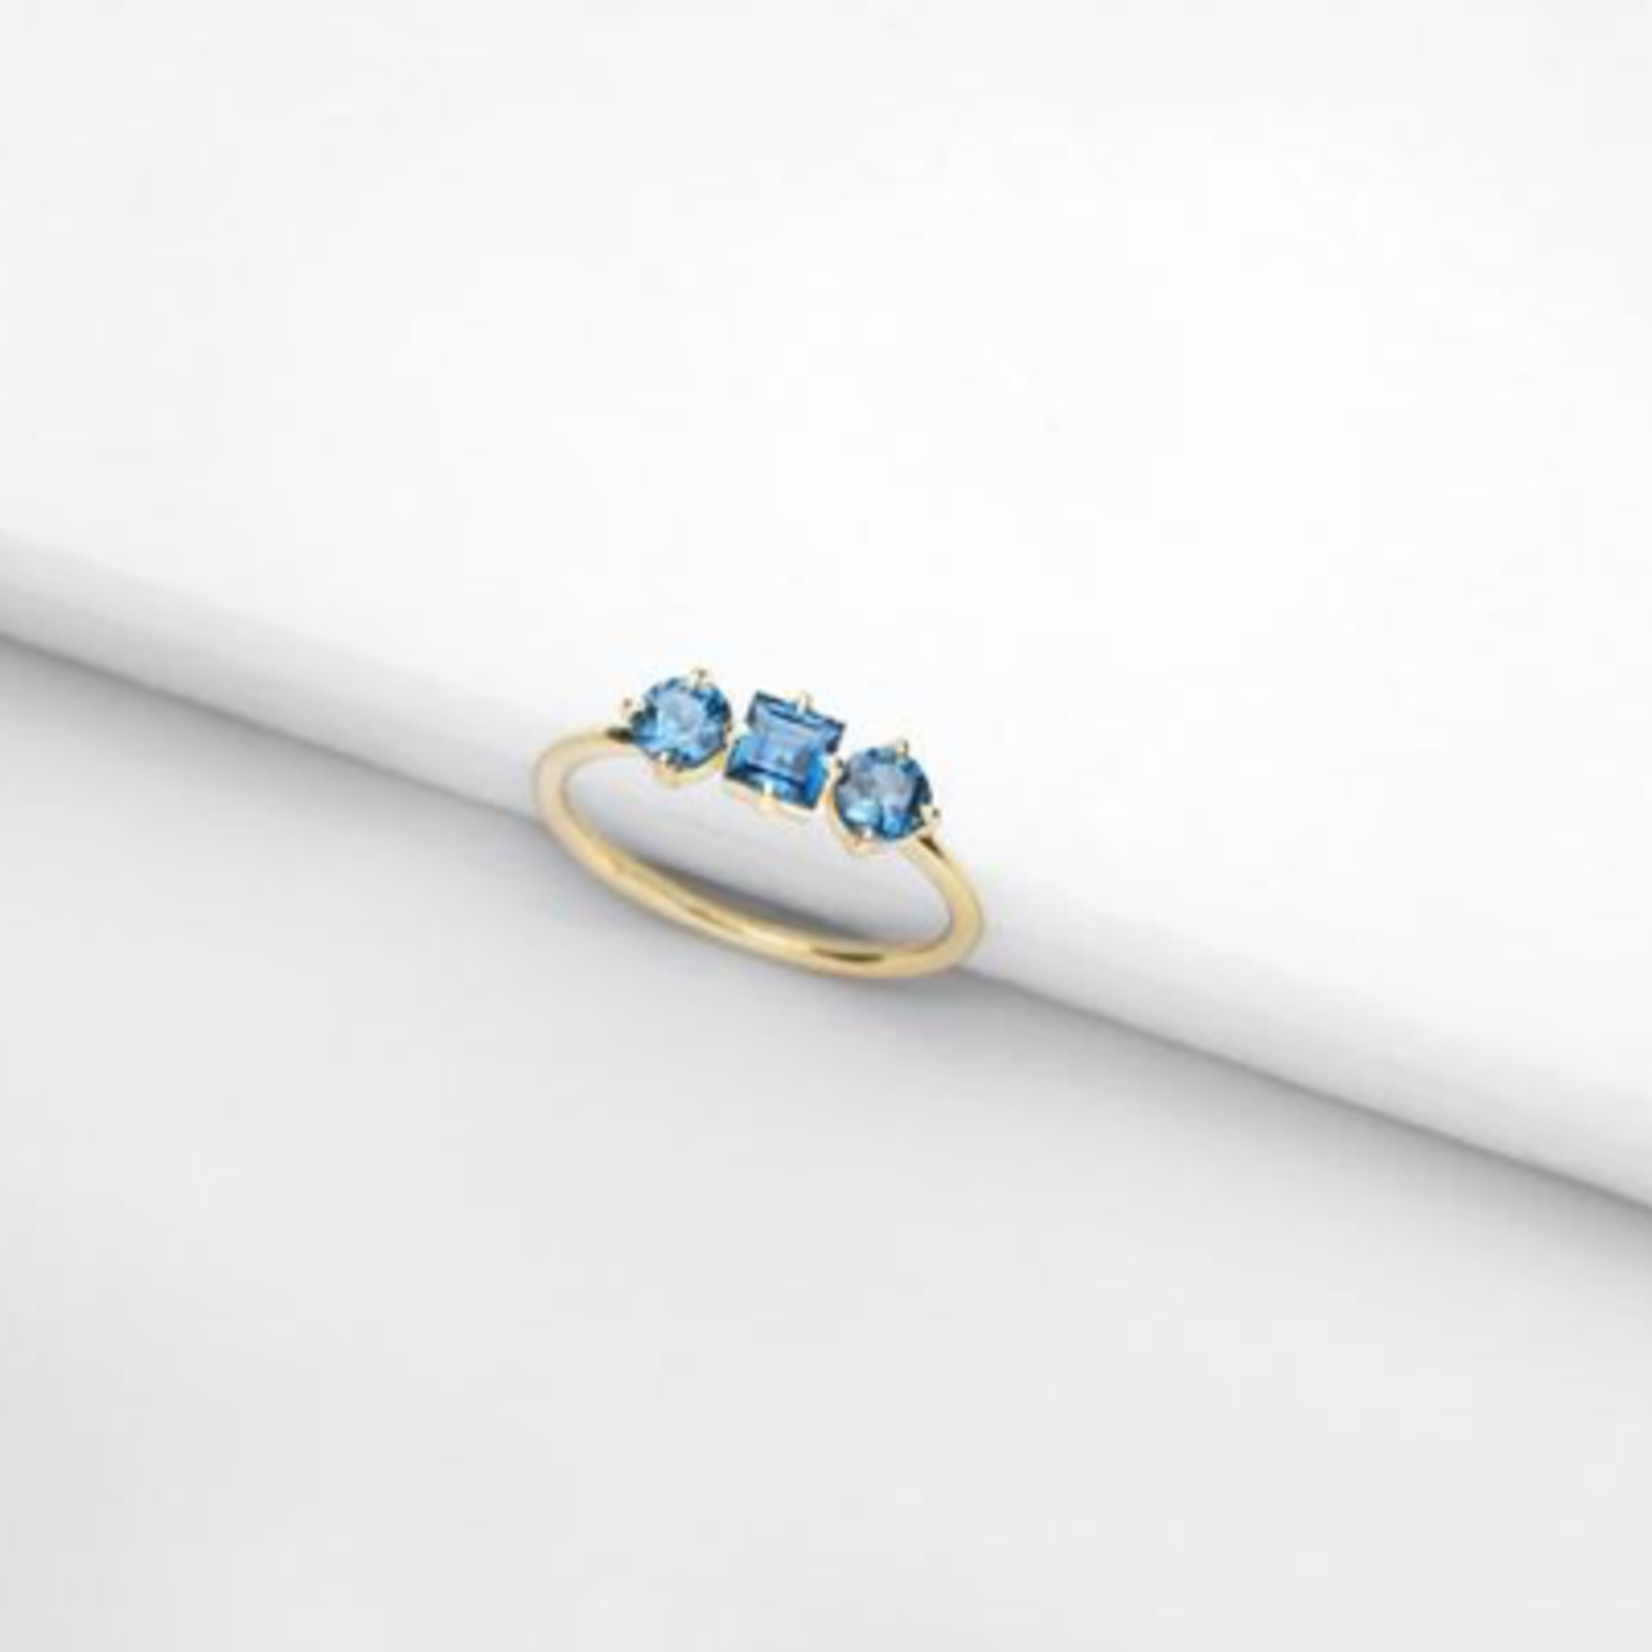 ILA Trilogy Blue Sapphire Ring 14KY- Size 6 1/2